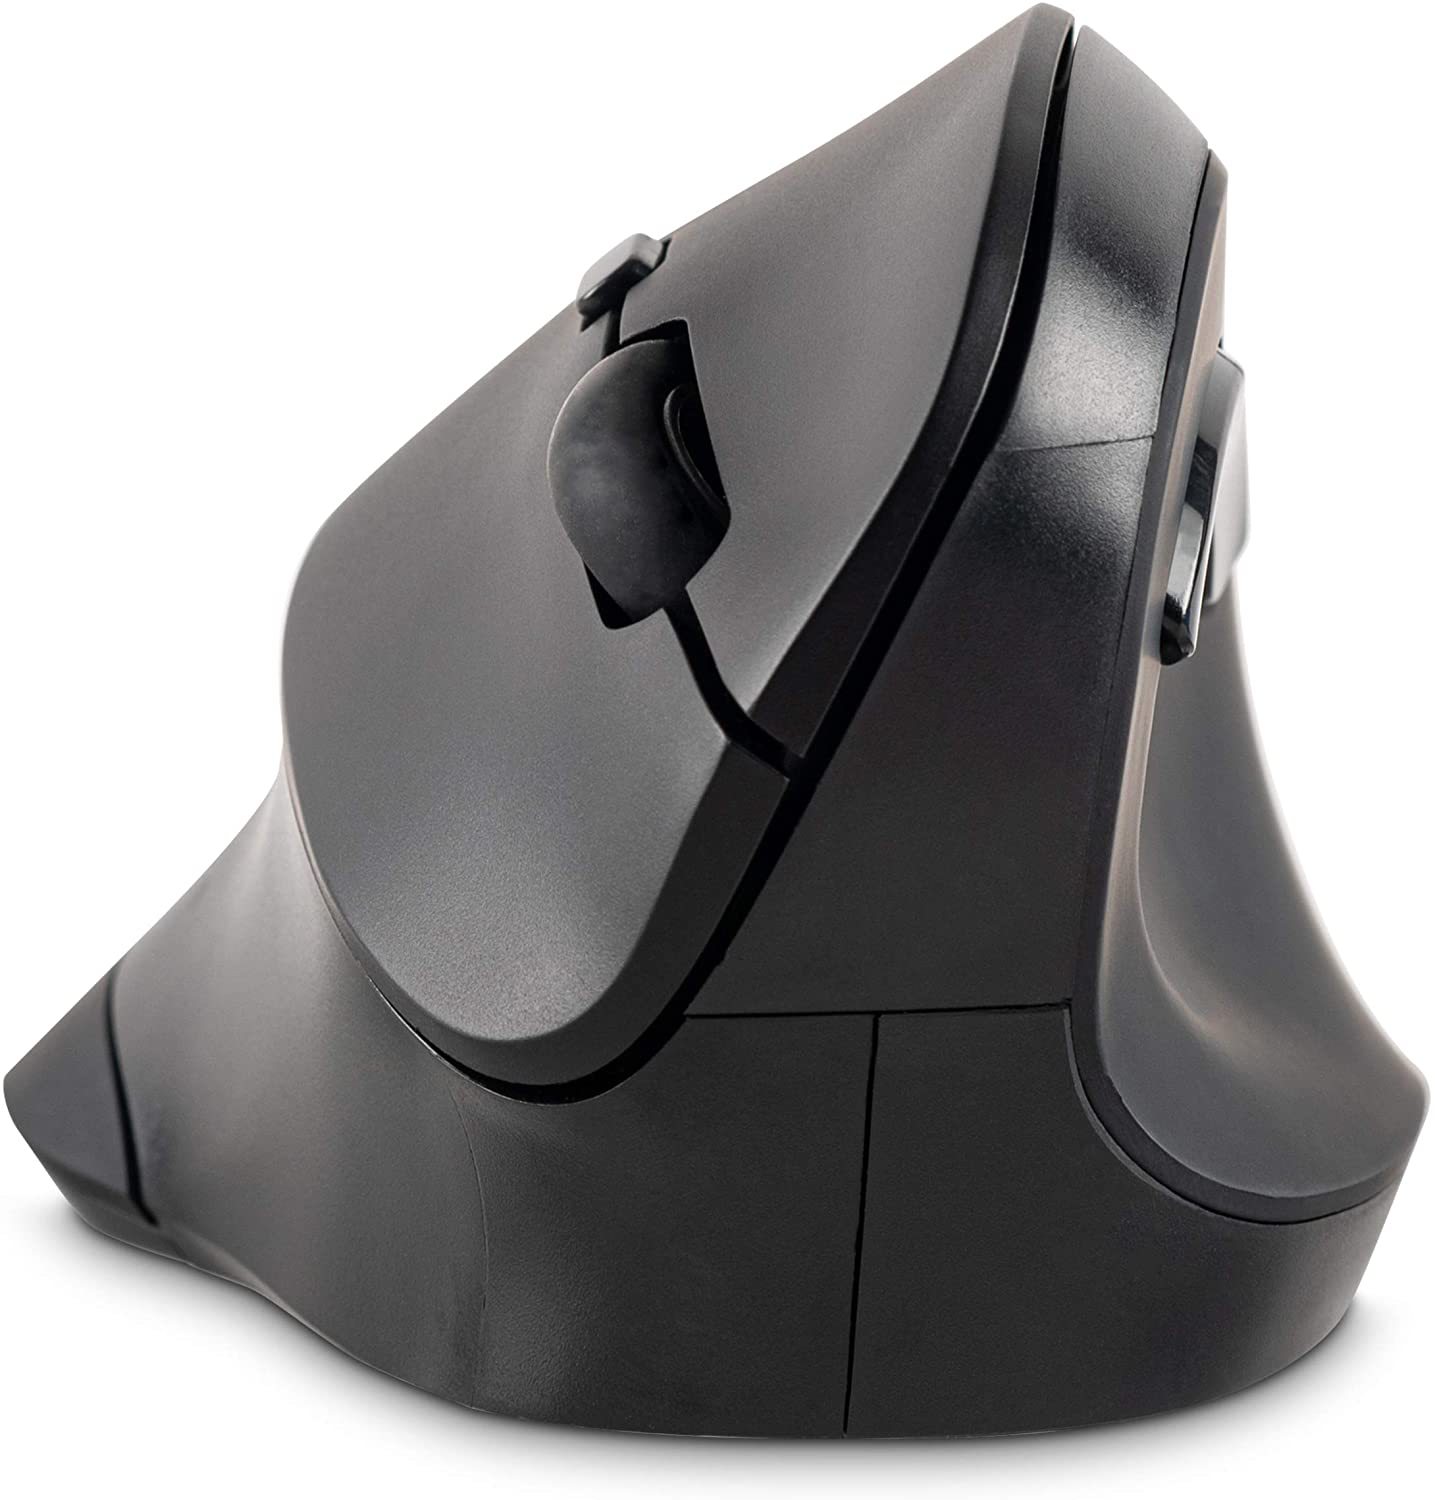 Kensington Ergonomic Vertical Wireless Mouse 